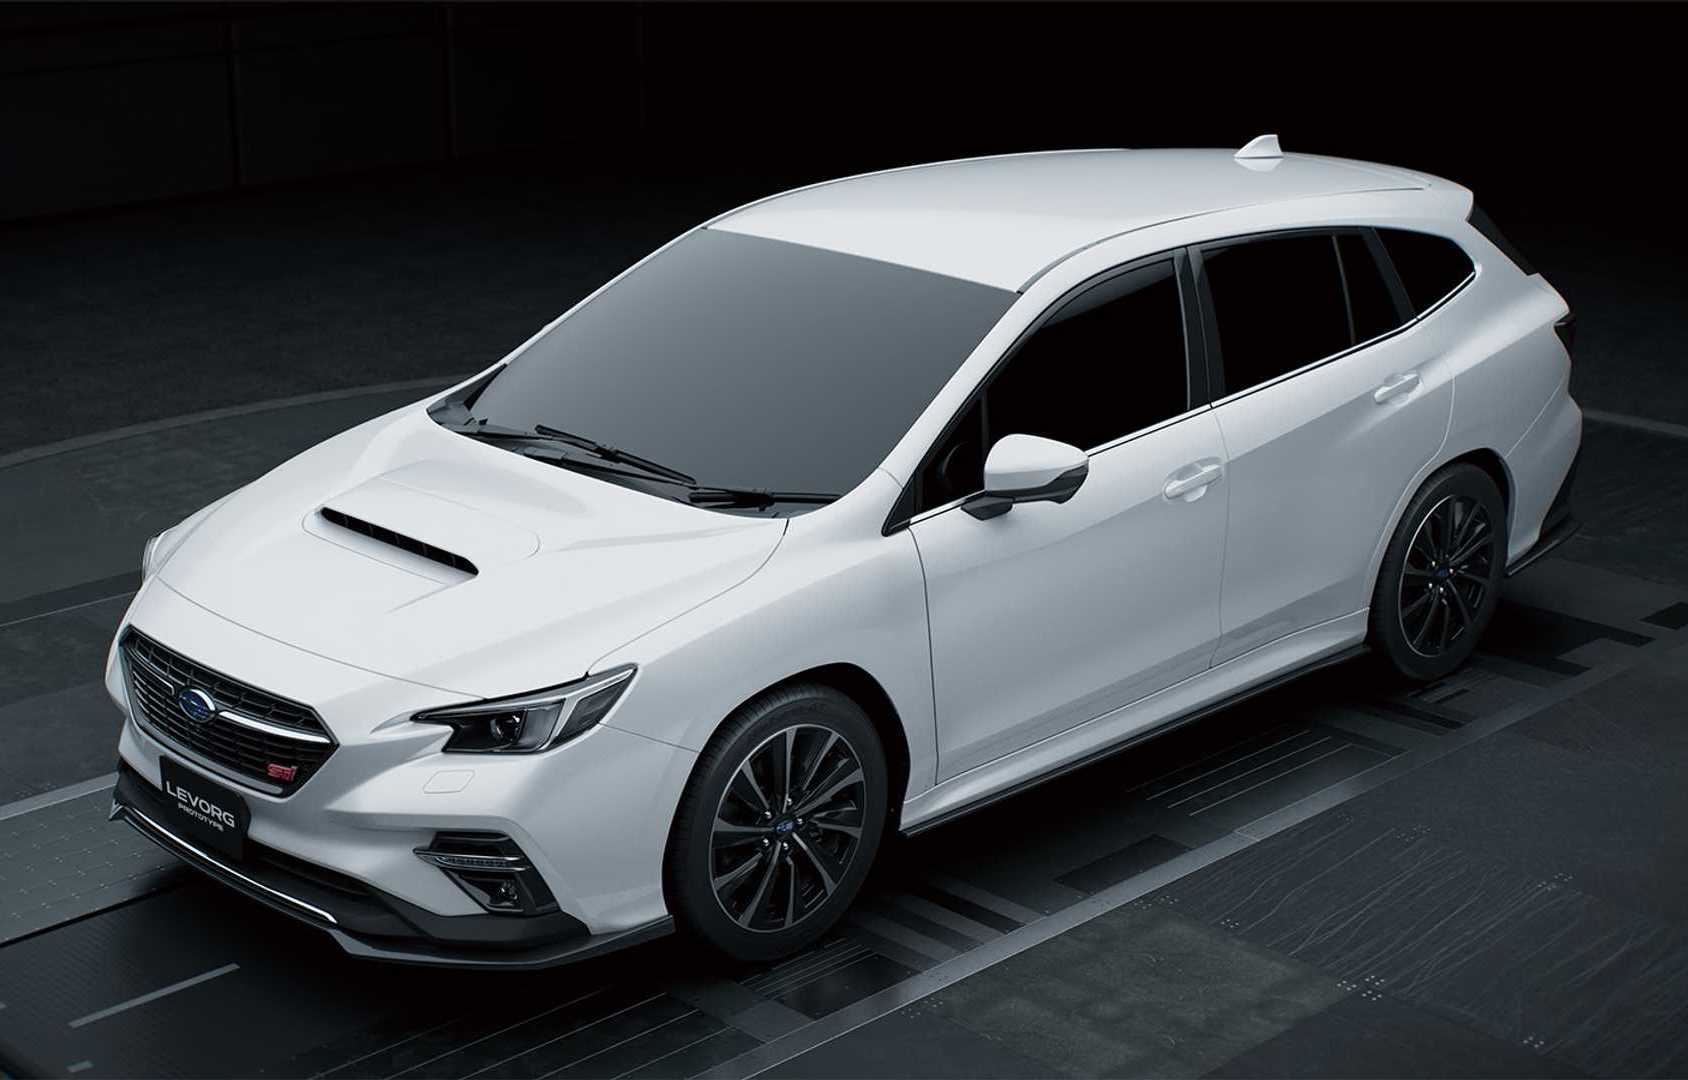 Subaru Levorg STI Sport prototype revealed, previews new model